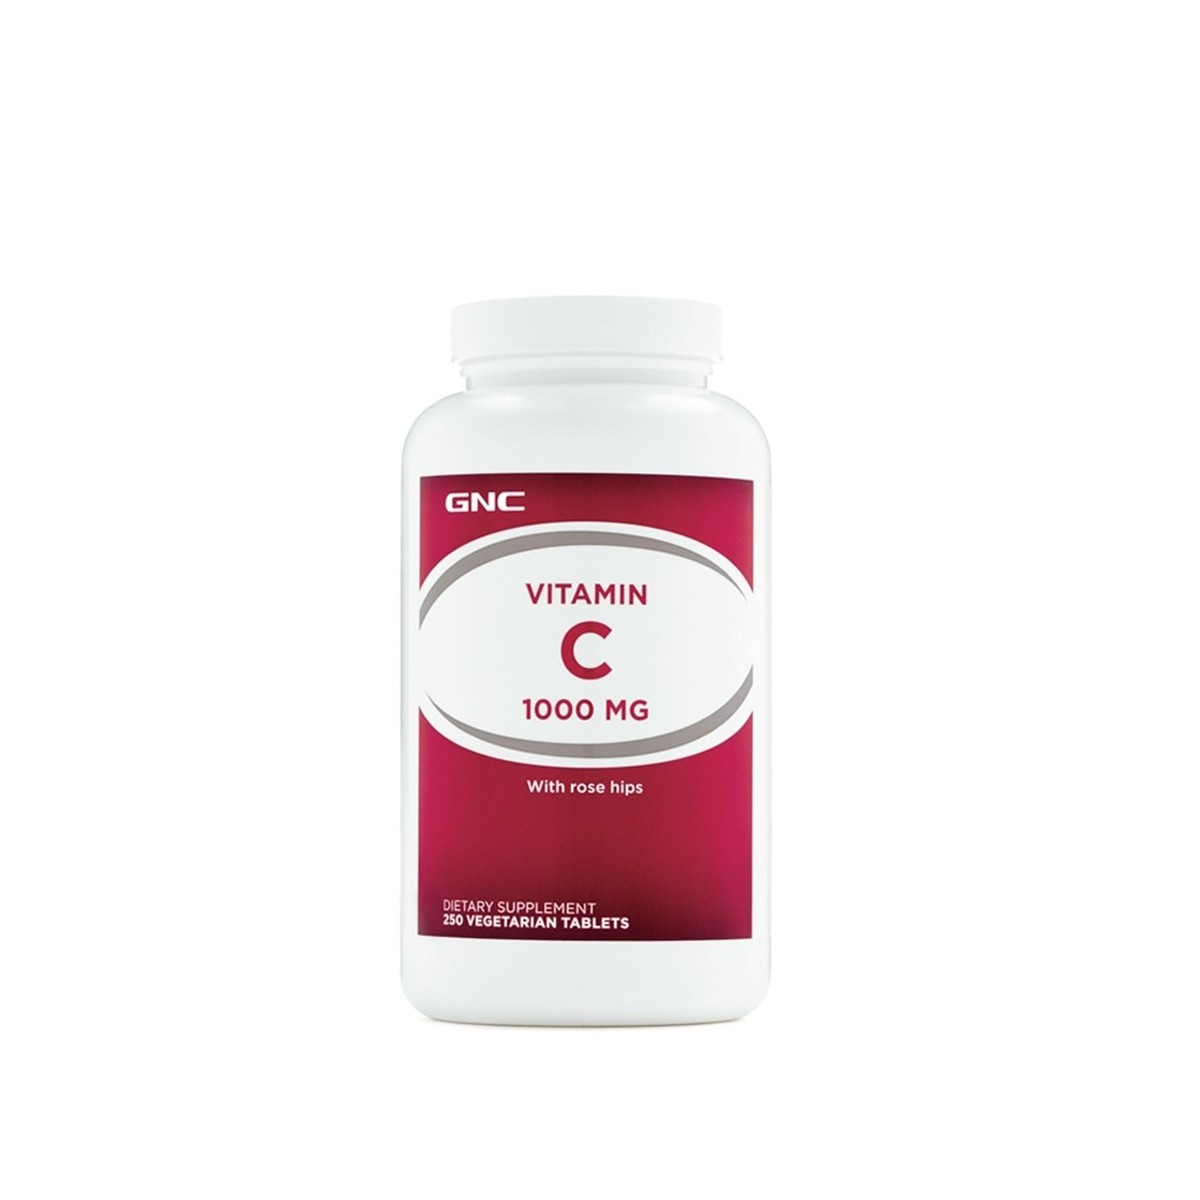 Vitamina C 1000mg cu macese, 250 tablete, GNC